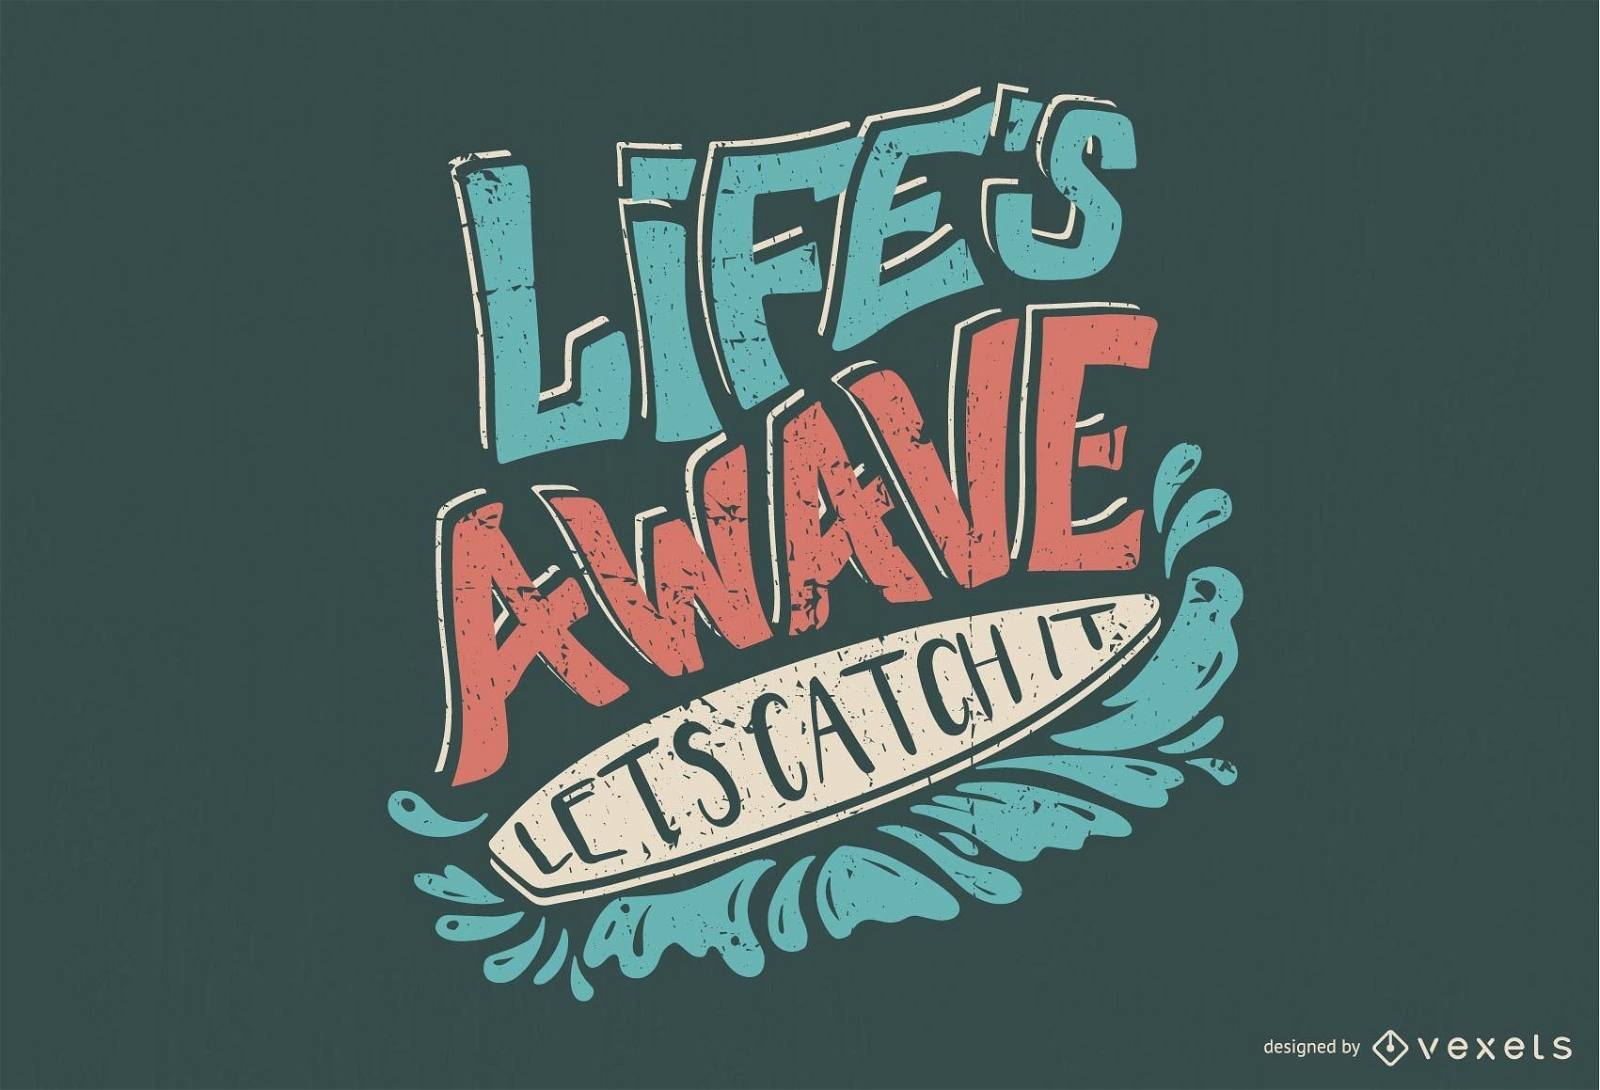 Life's Awave Let's Catch it Lettering Design